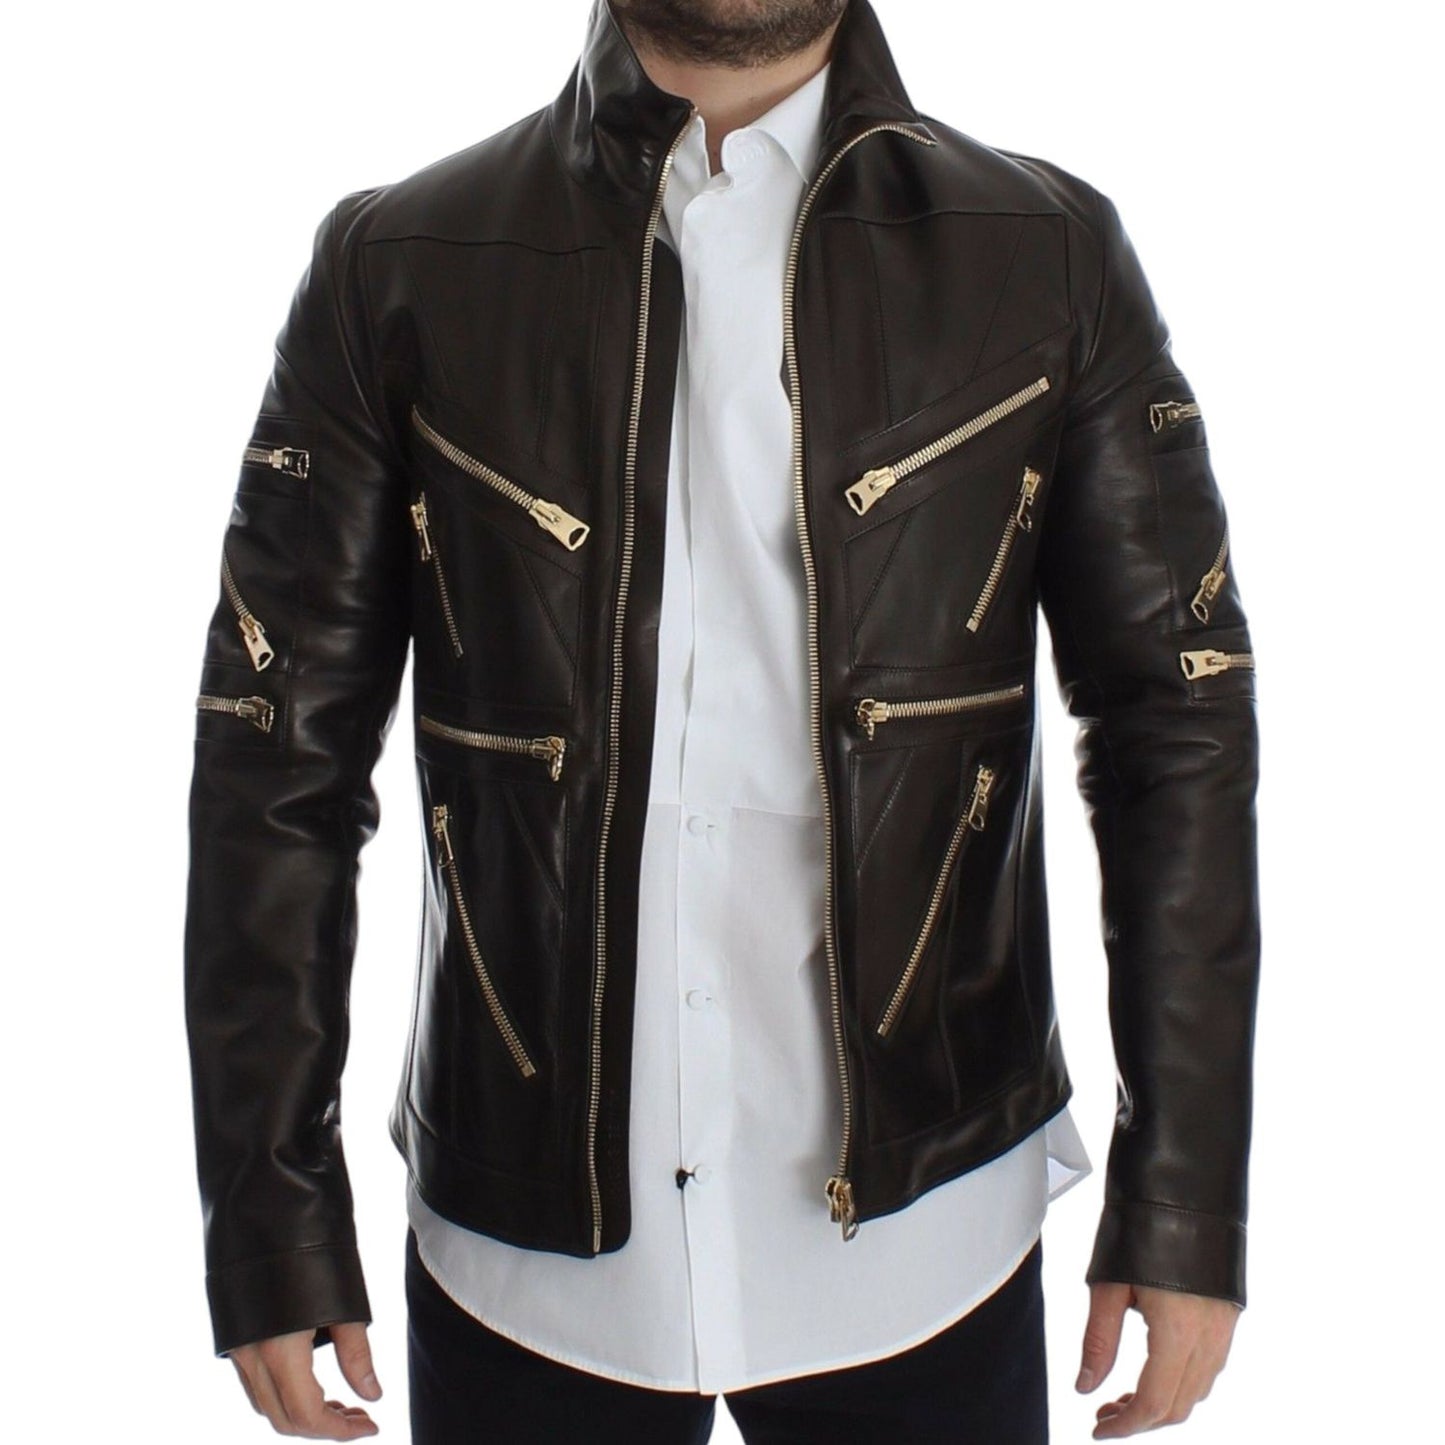 Dolce & Gabbana Elegant Brown Gold-Detailed Leather Jacket Coats & Jackets brown-lambskin-leather-zipper-jacket